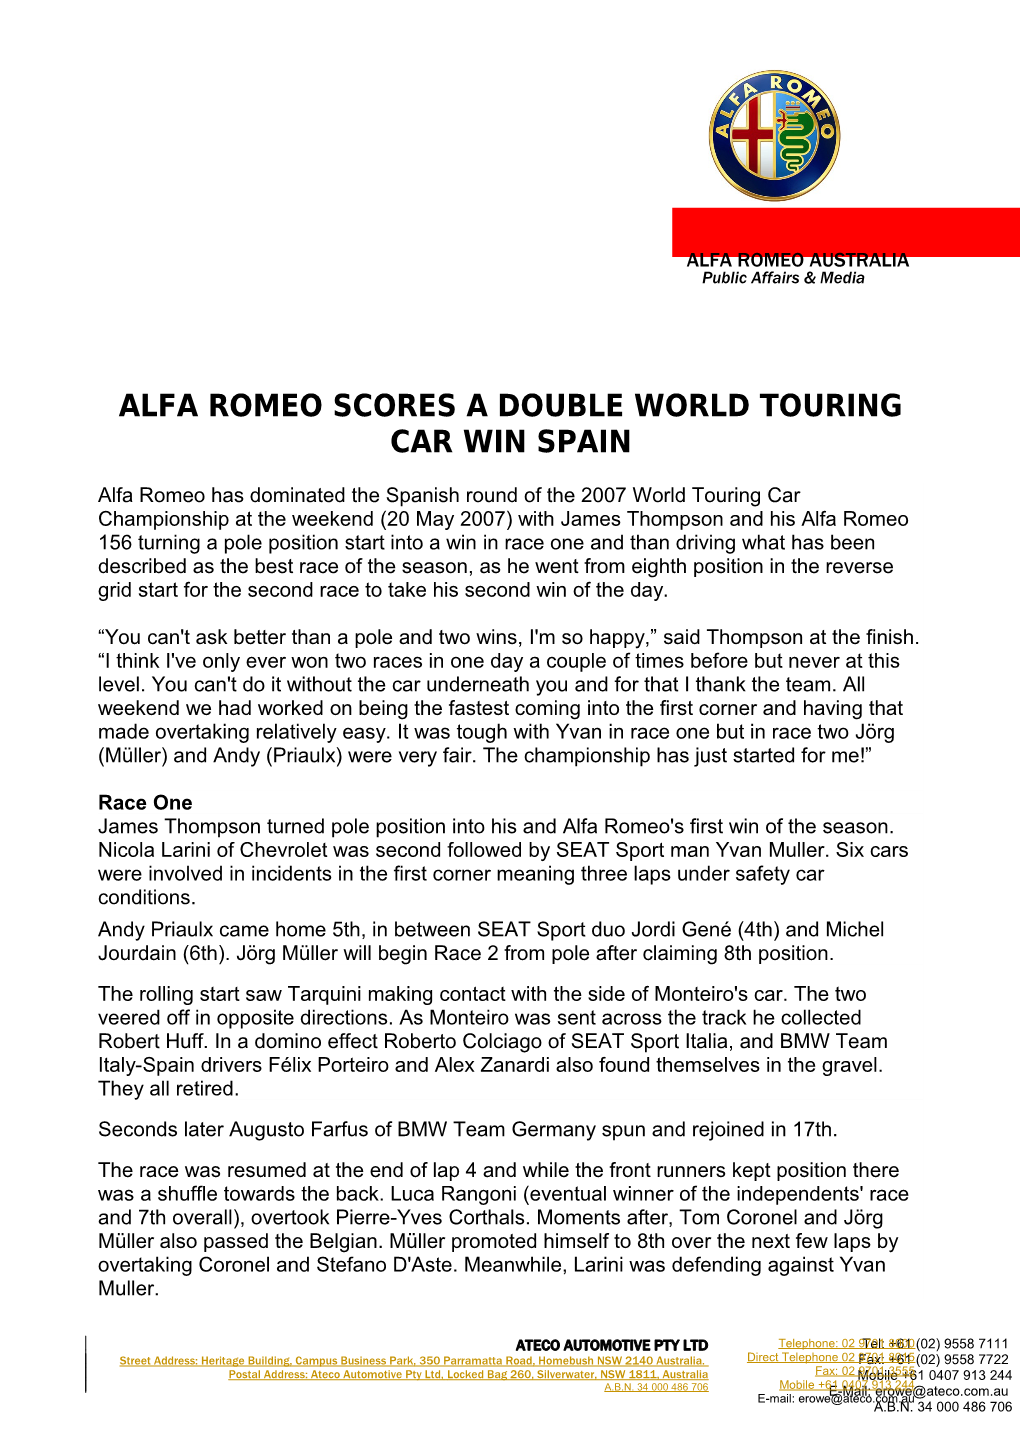 Alfa Romeo Scores a Double World Touring Car Win Spain